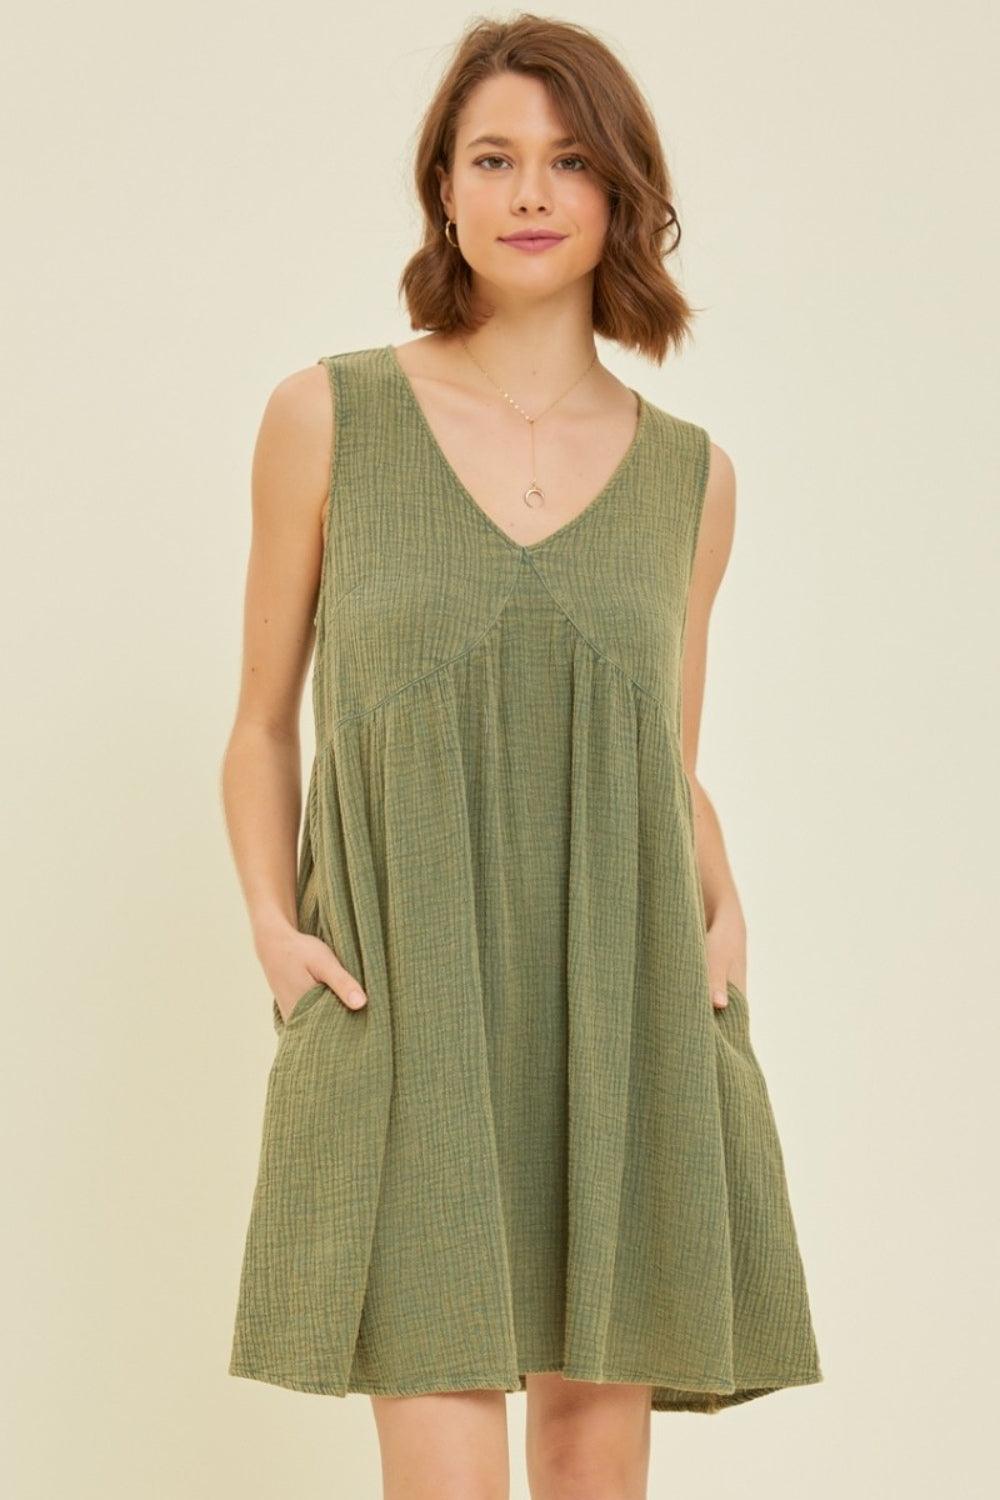 HEYSON Full Size Texture V-Neck Sleeveless Flare Mini Dress Green